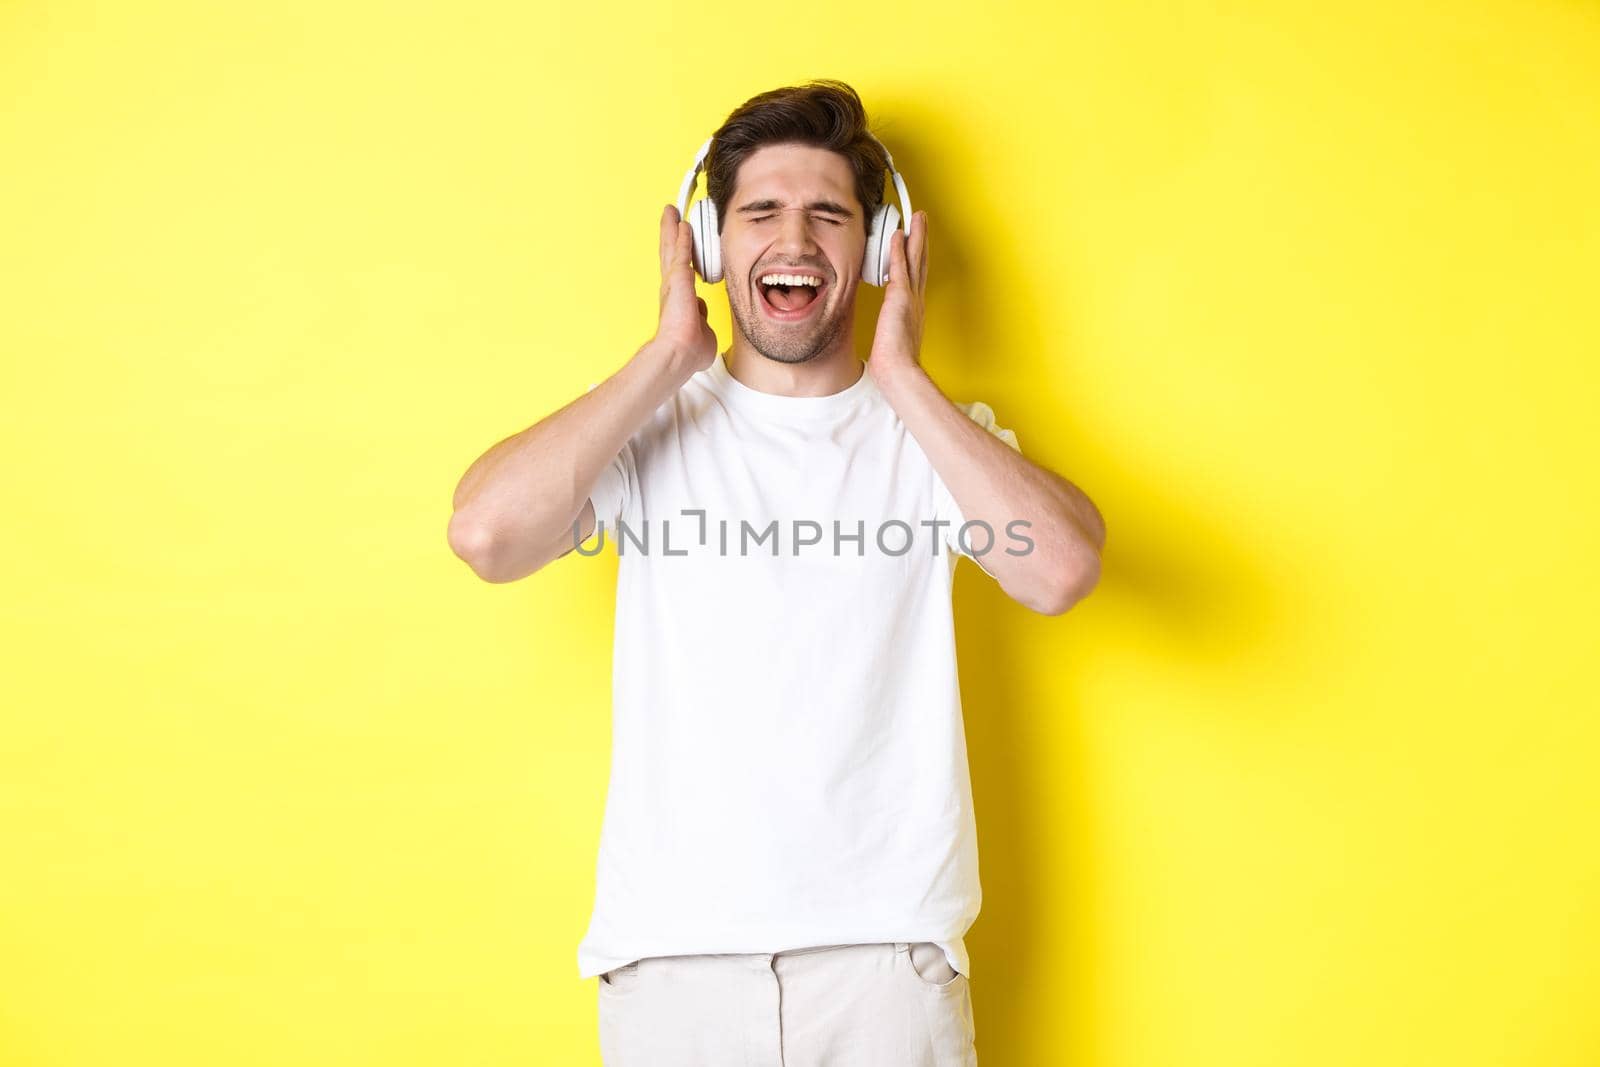 Happy guy listening music in new headphones, buying earphones on black friday, standing over yellow background.